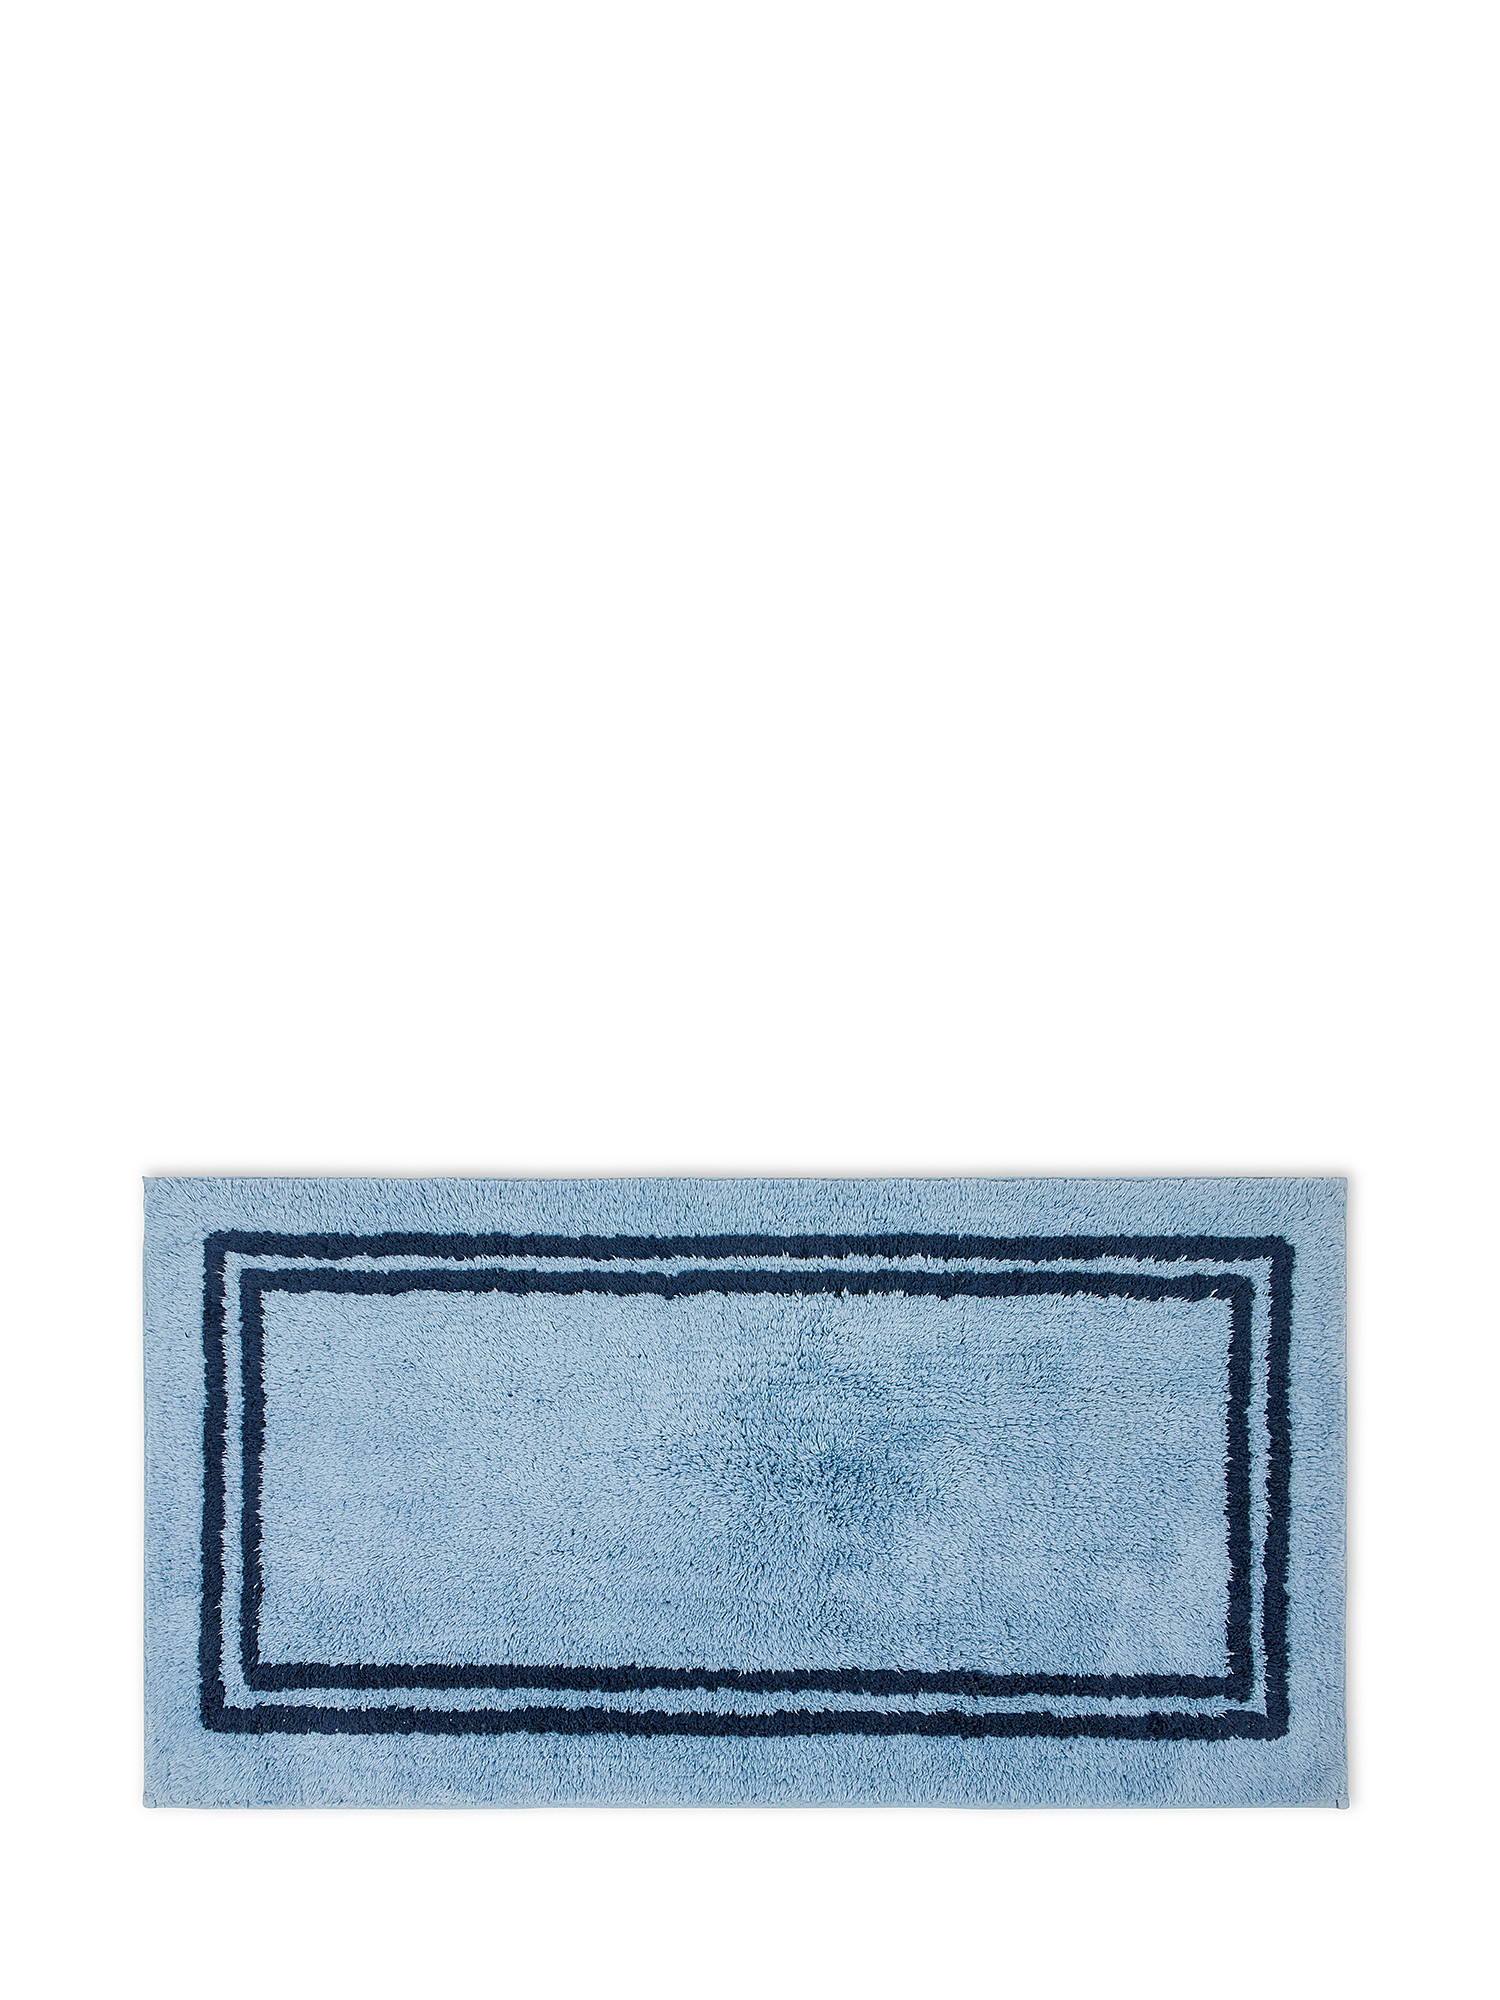 Tappeto da bagno taftato, Blu chiaro, large image number 0